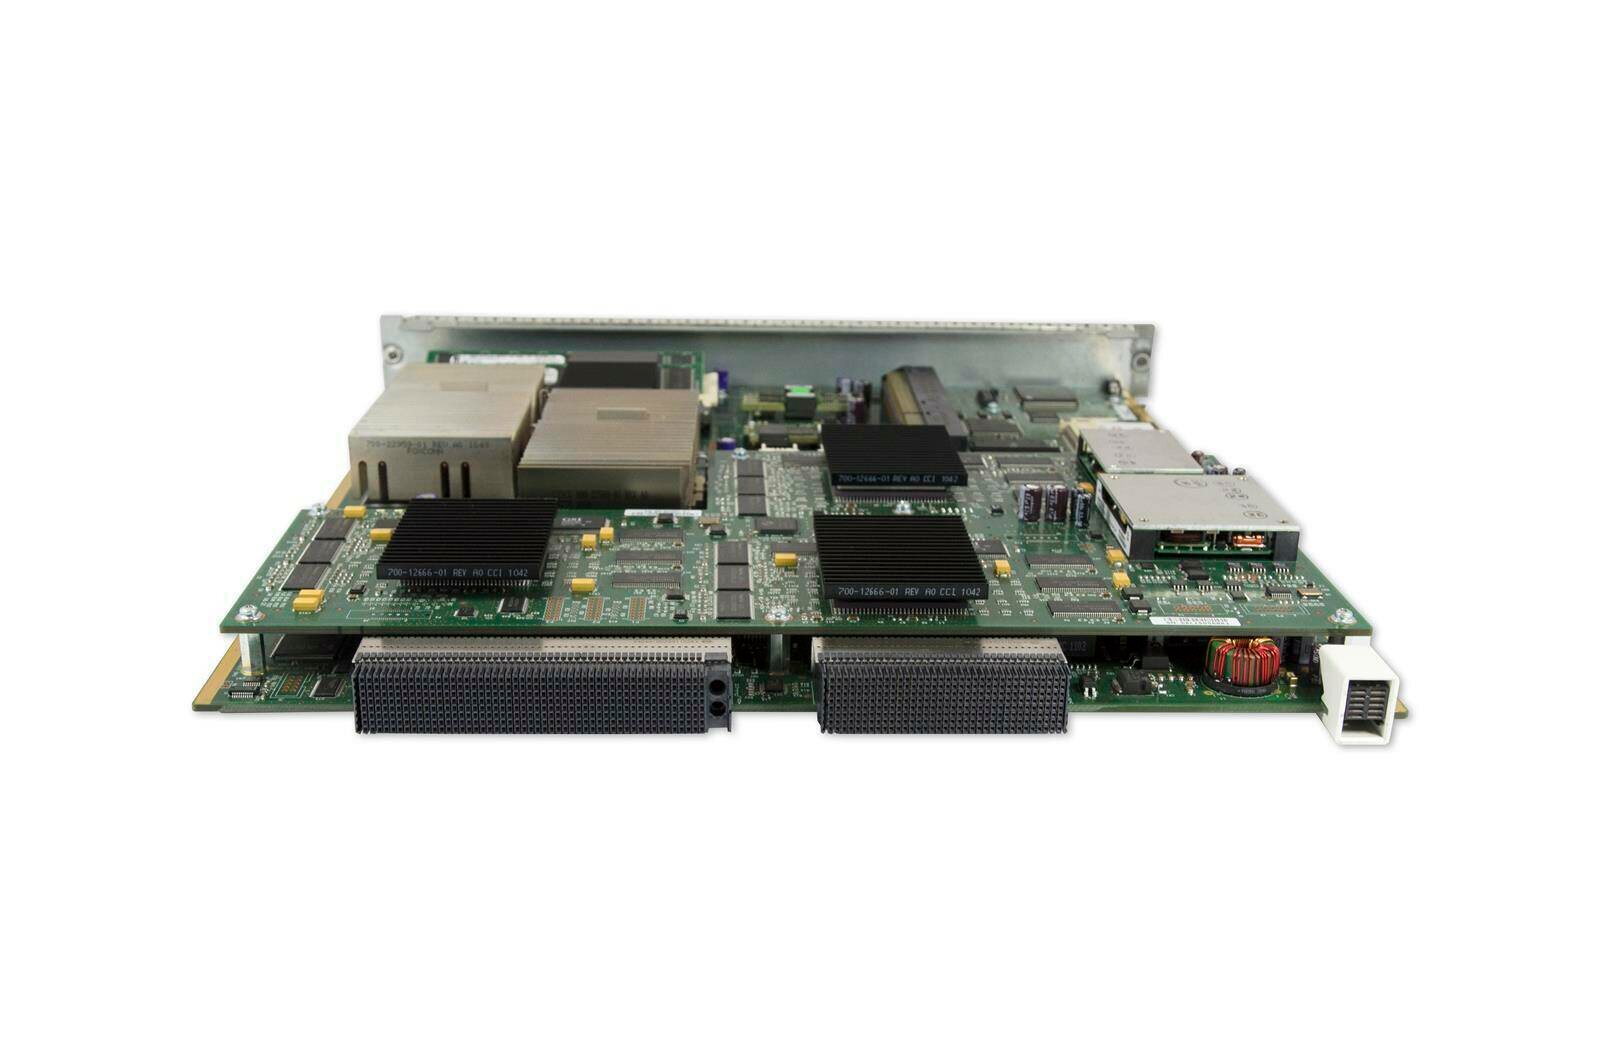 Модуль Cisco Catalyst WS-SVC-FWM-1-K9 5,5 Гб/сек 4х20G 2Gb Dram 128 MB Flash для Catalyst 6500